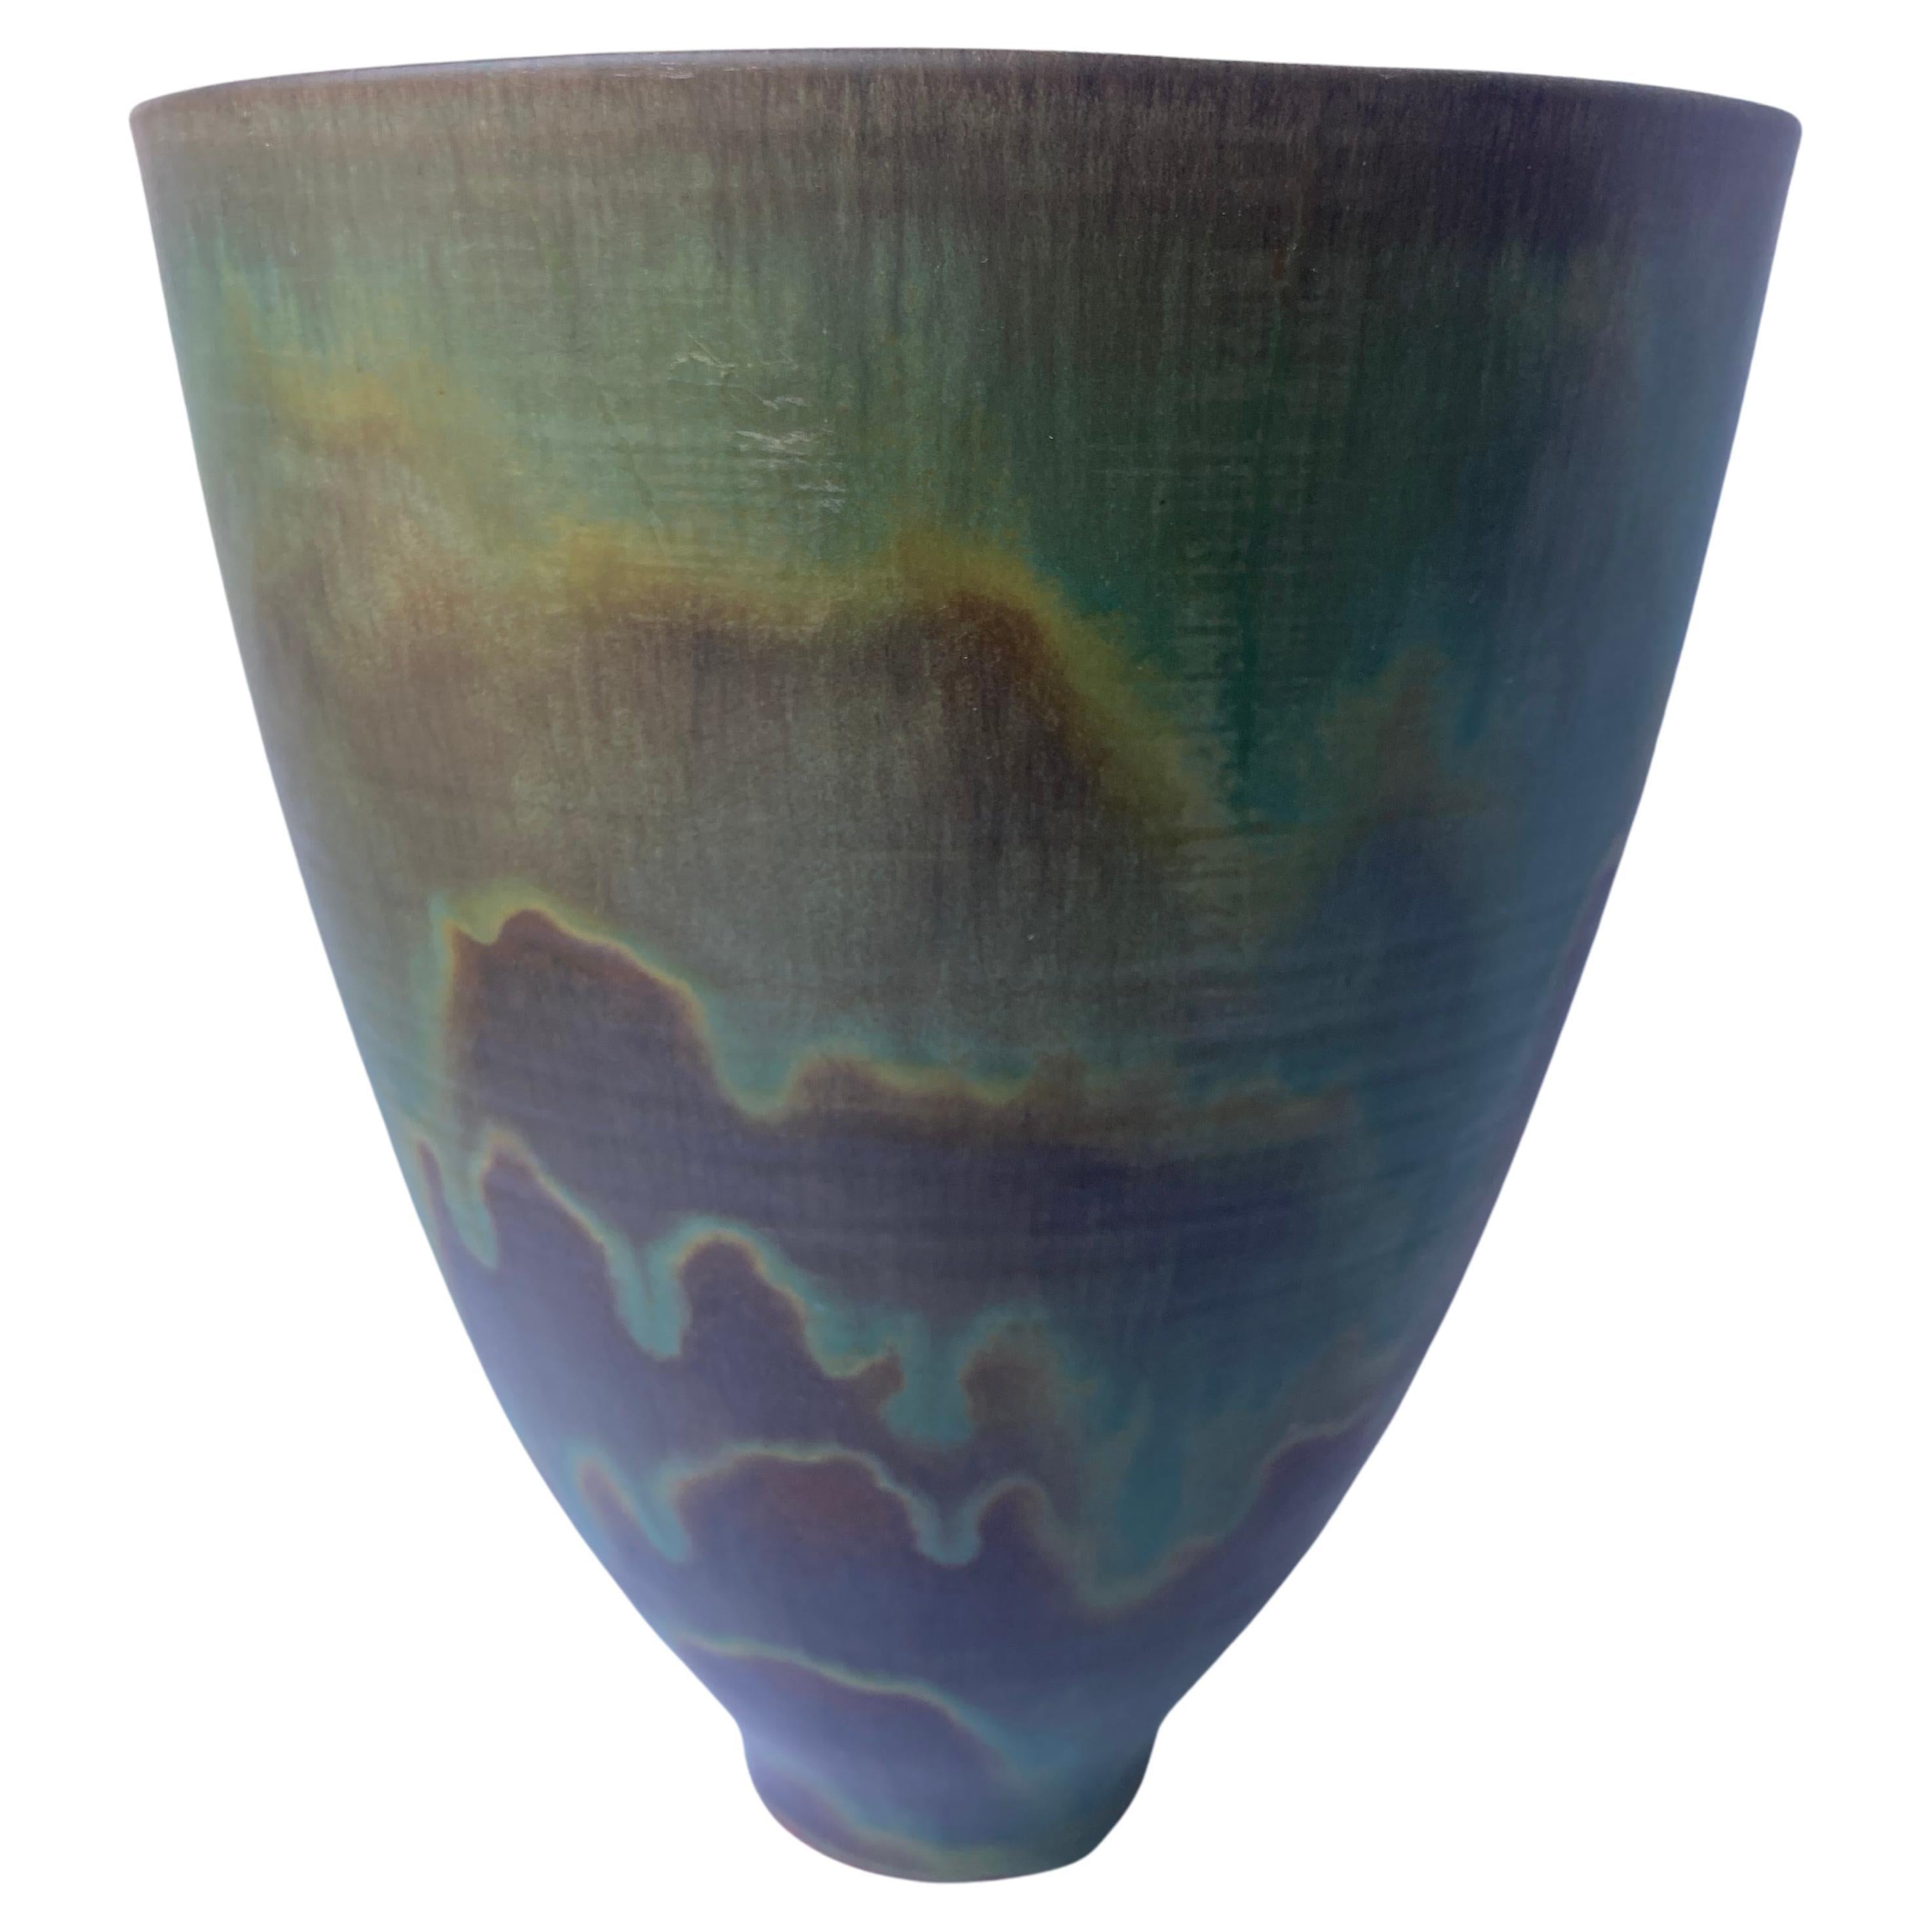 Otto Natzler Large Terracotta / Pottery Vase in Green Metal Glaze, Signed